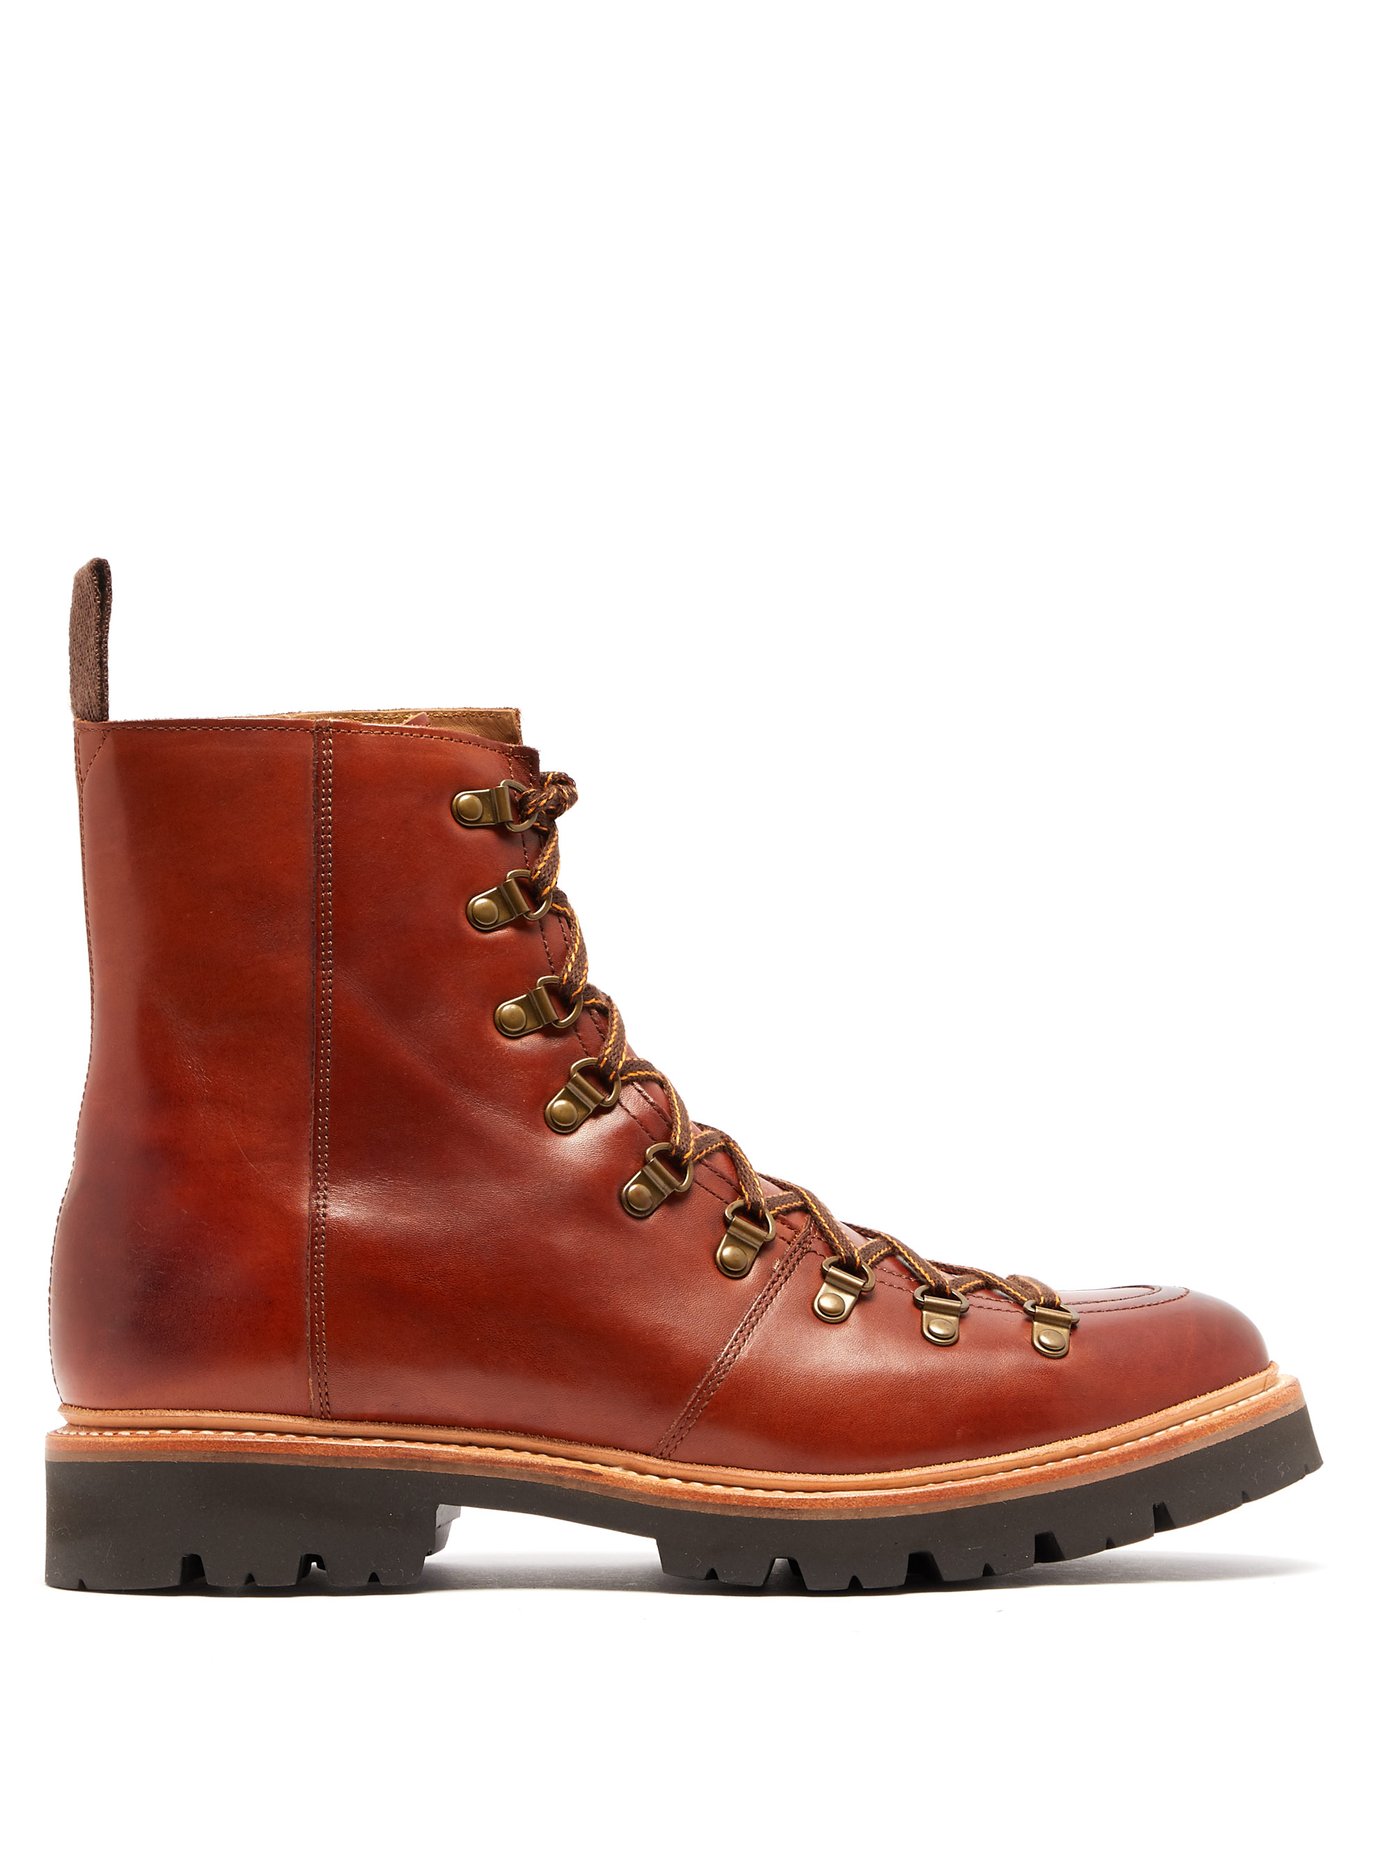 Brady leather hiking boots | Grenson 